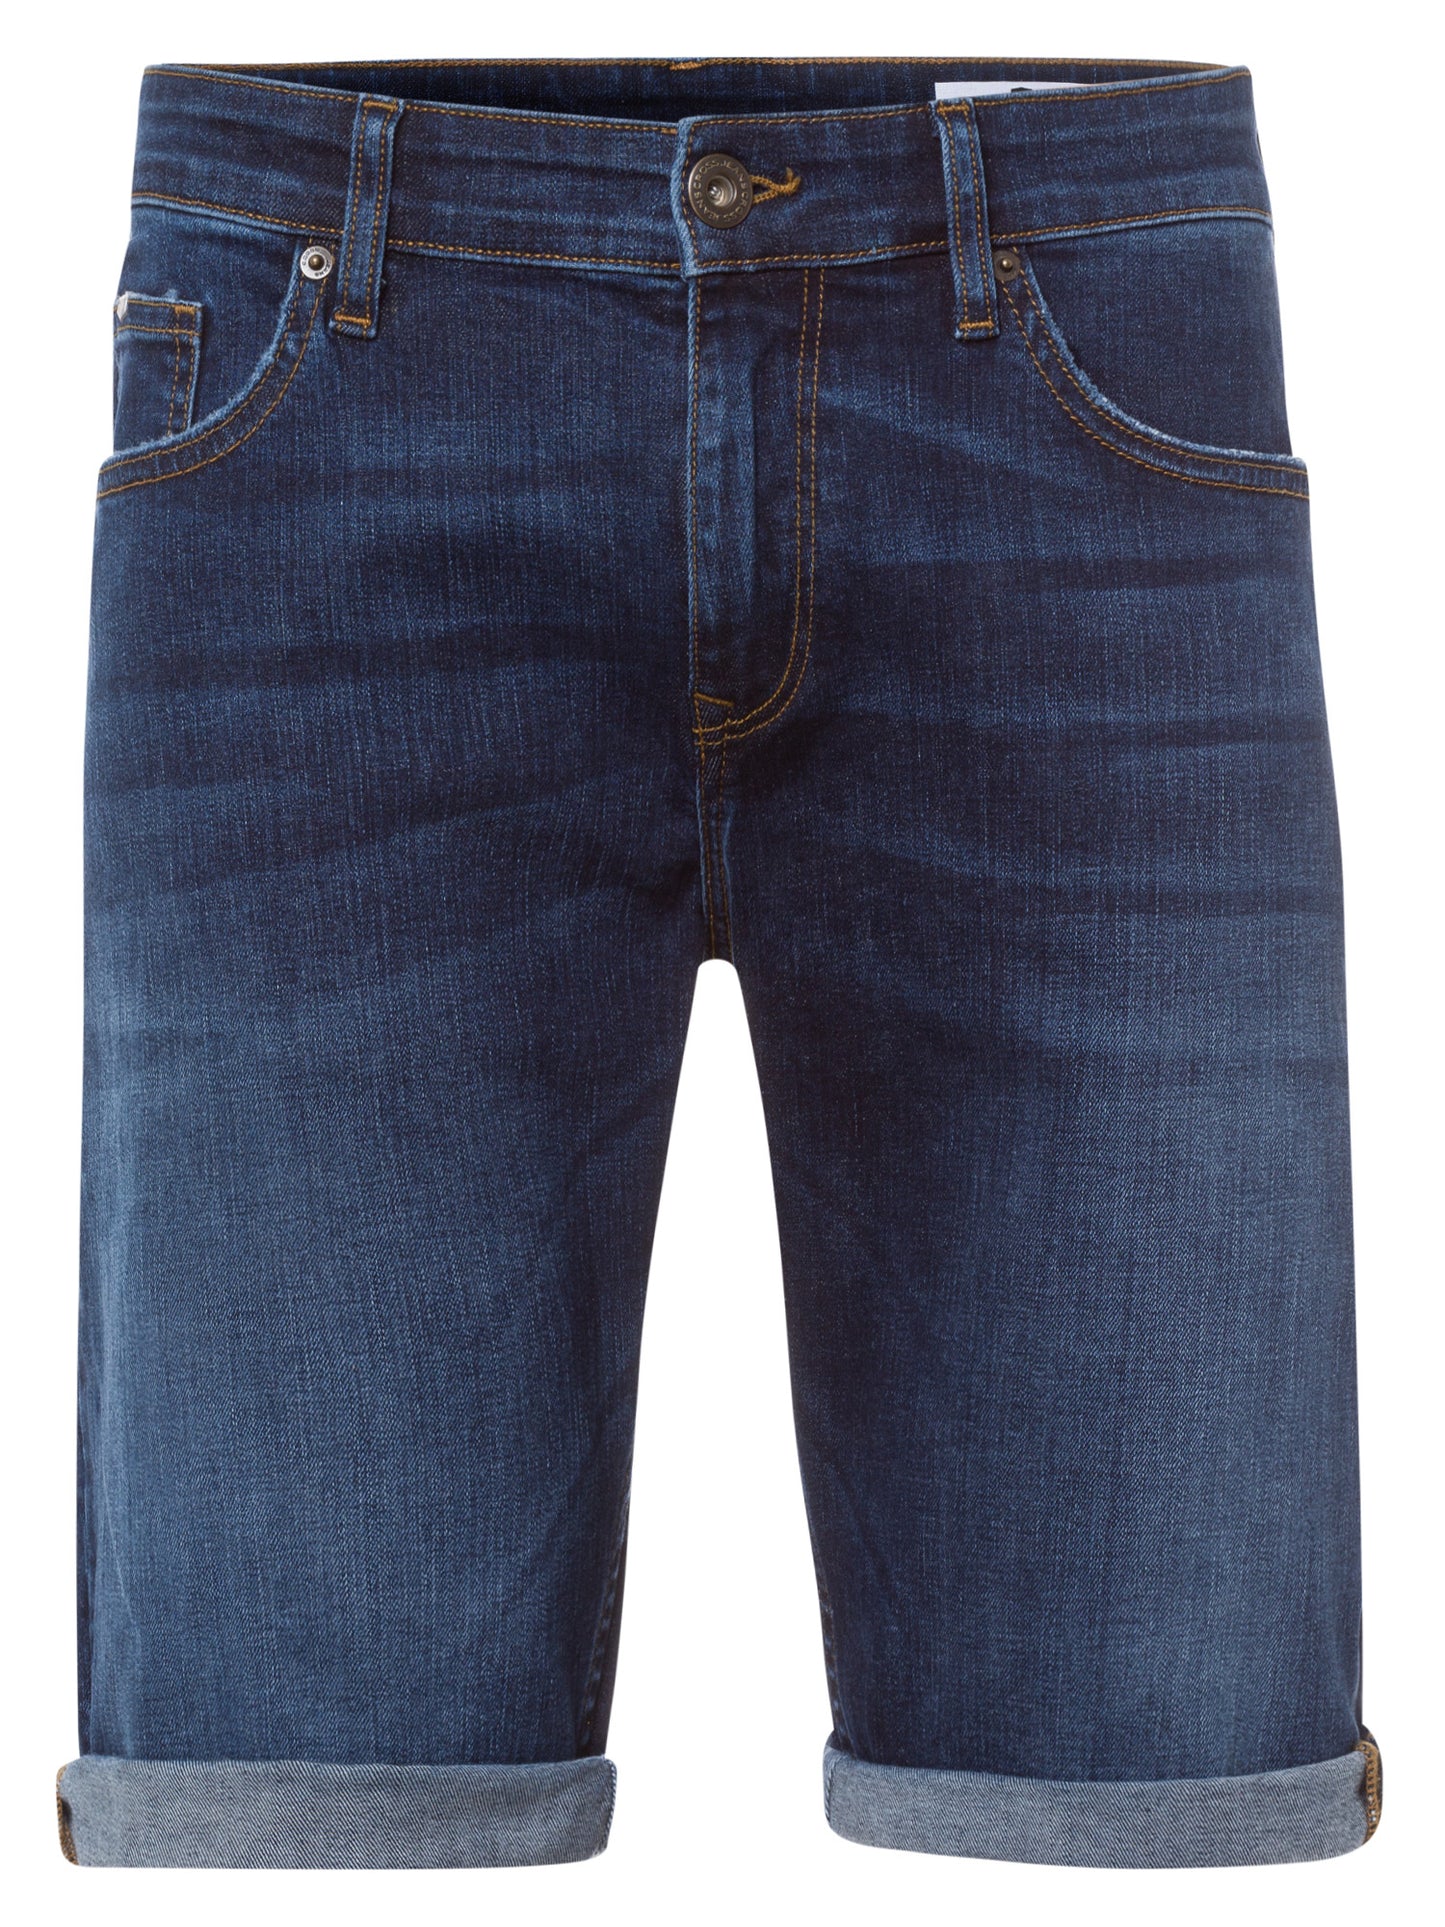 Leom men's jeans regular shorts dark blue